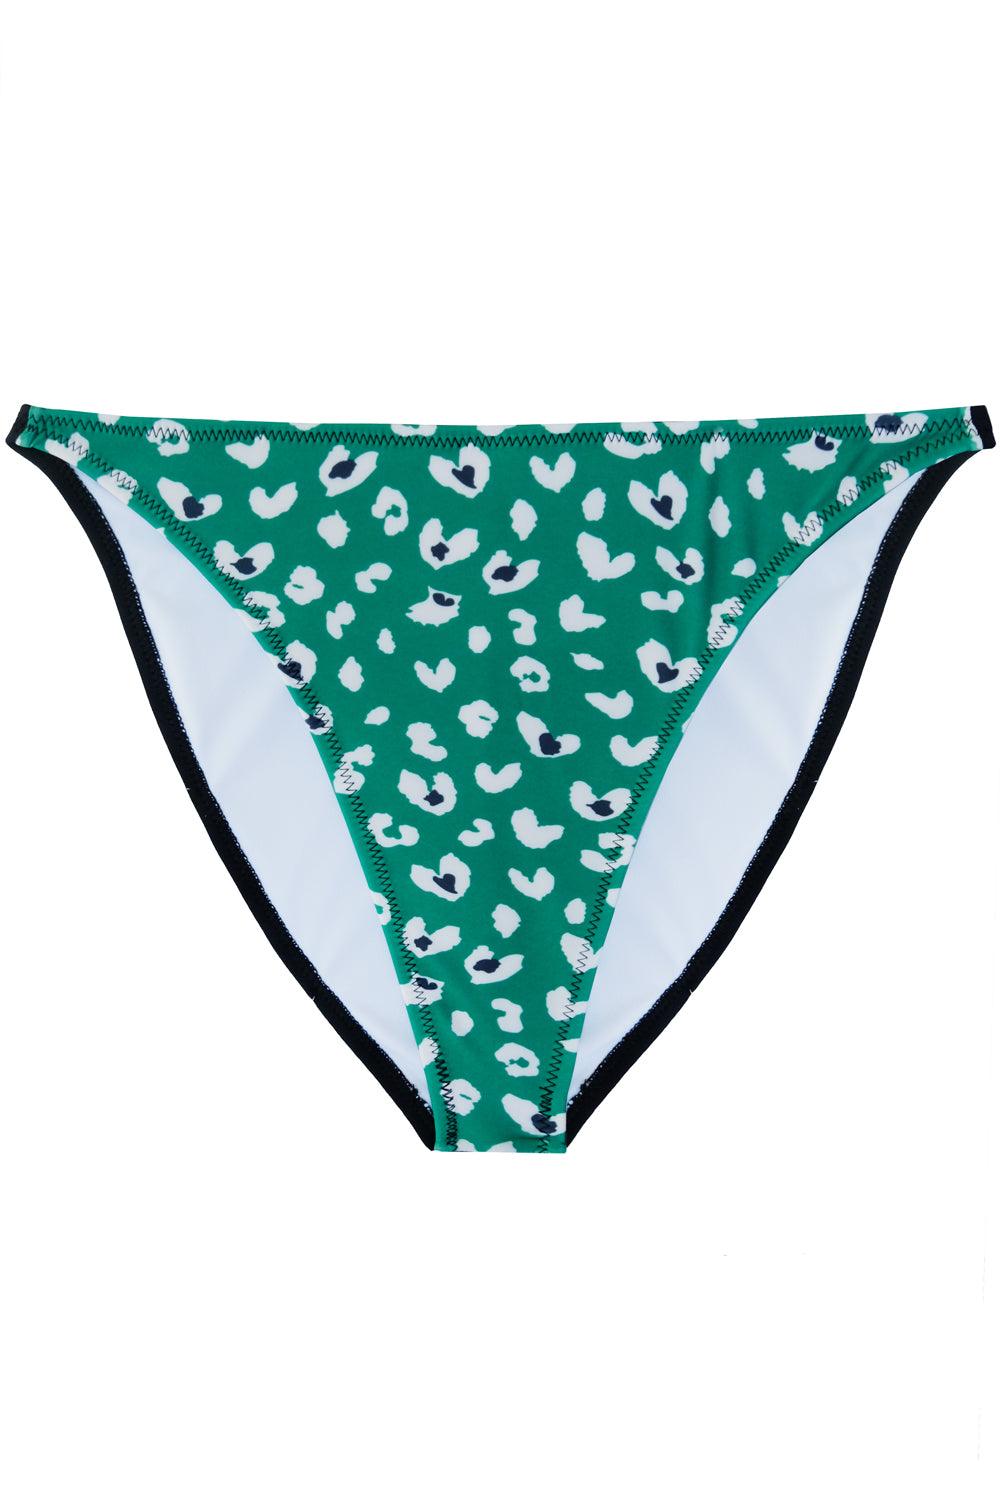 Smoothie Leo Green bikini bottom - yesUndress